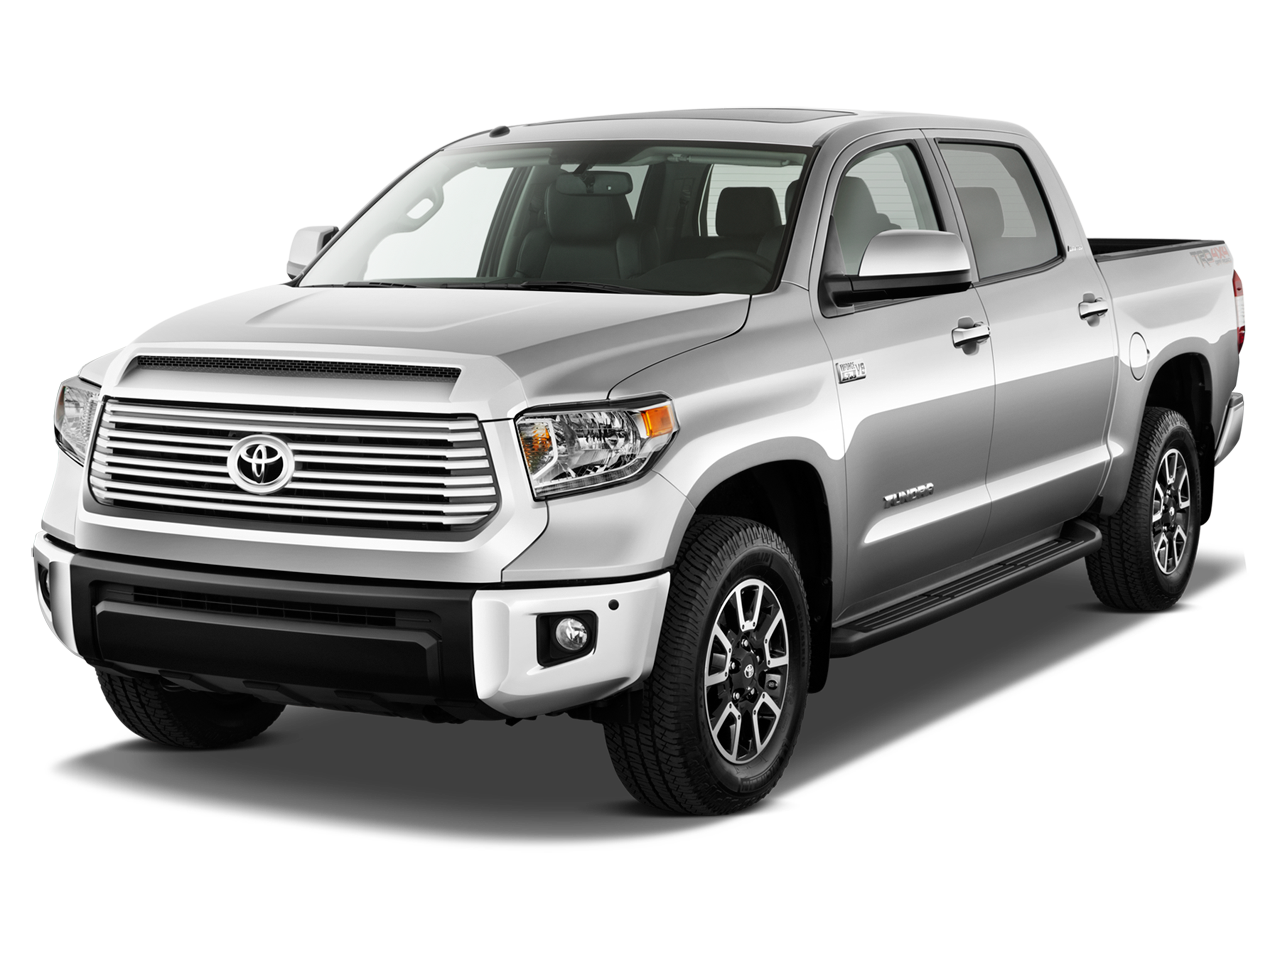 2016 Toyota Tundra: Do You Re